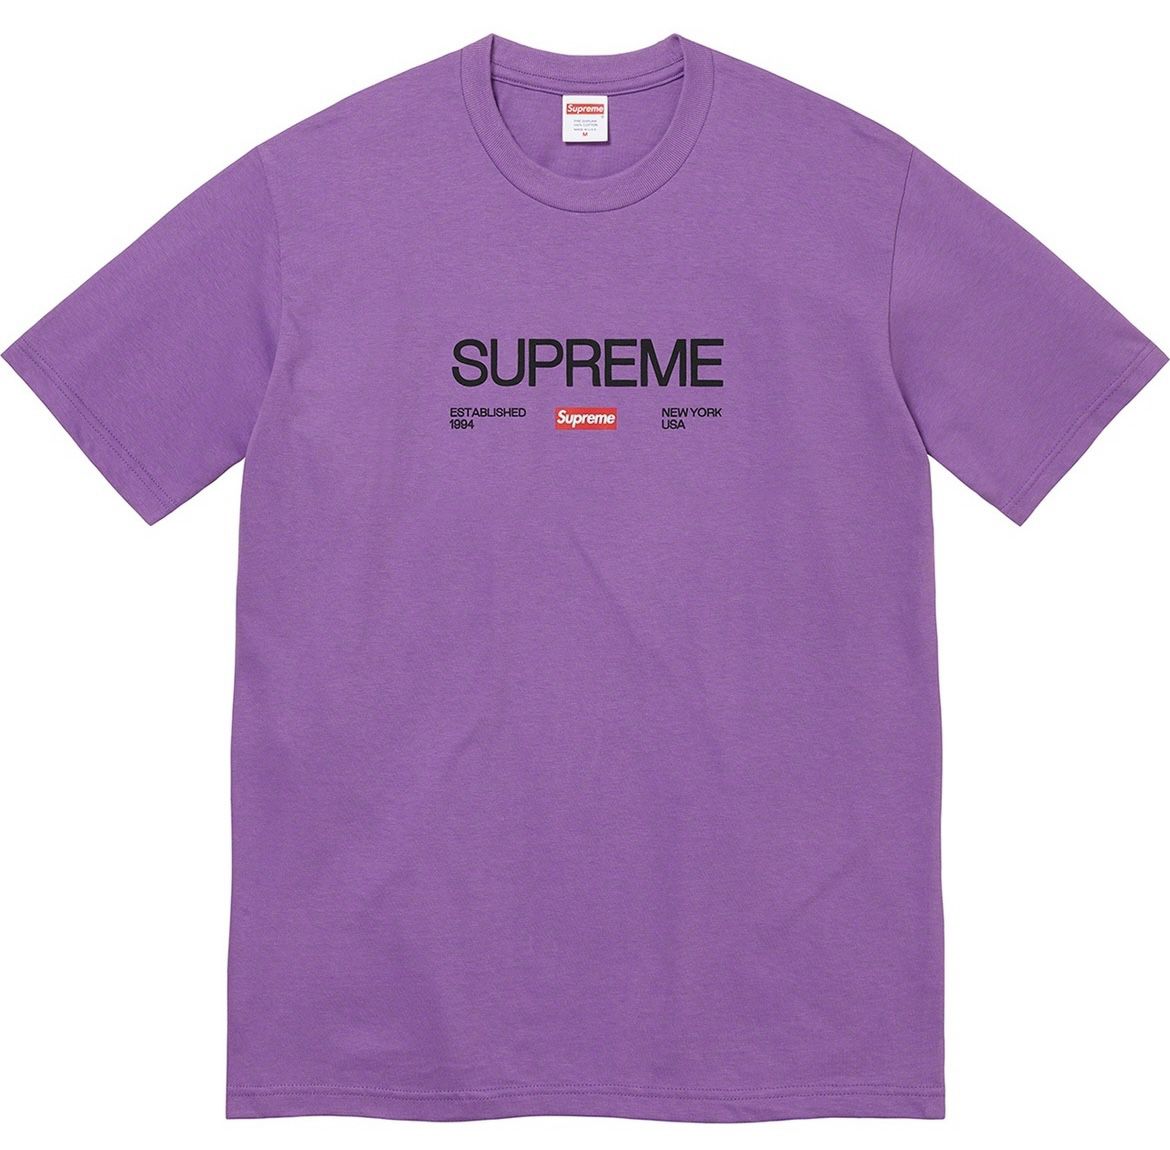 Supreme Est. 1994 Tee (Sz. M)